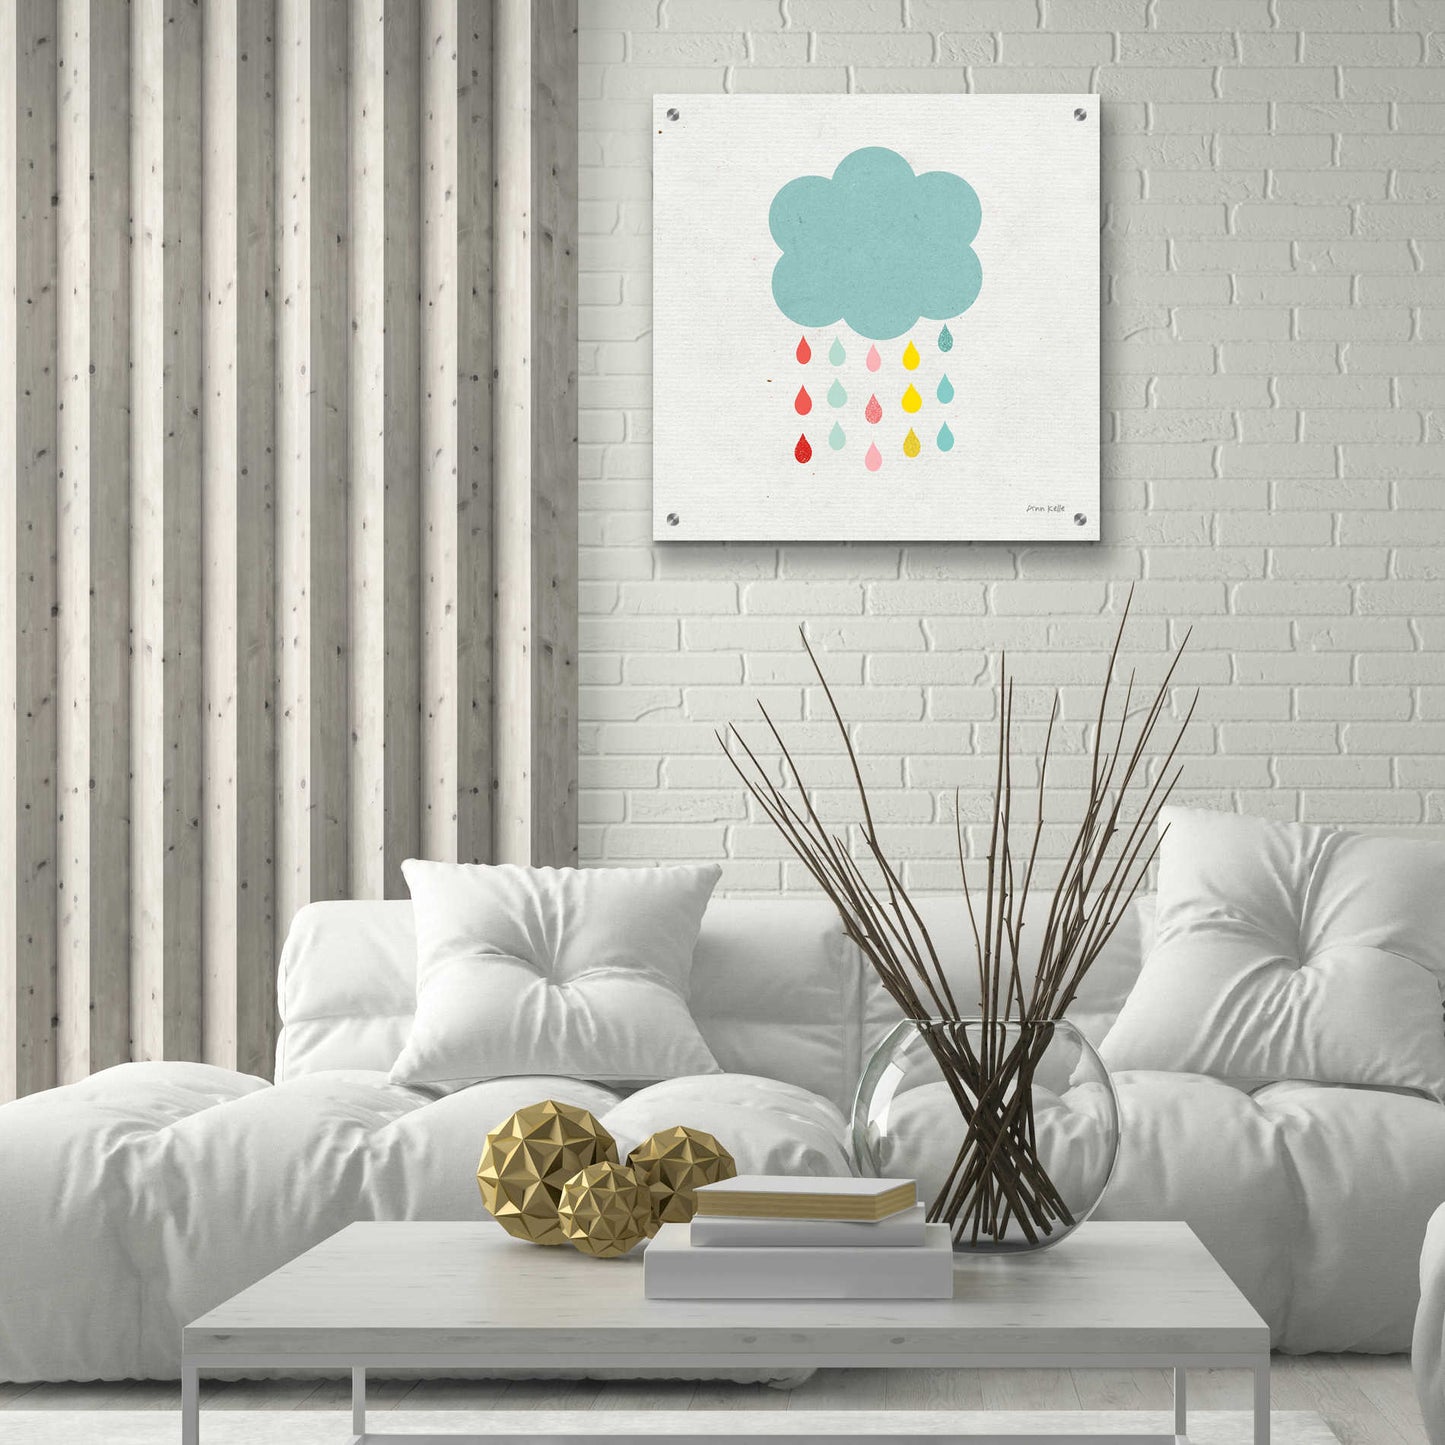 Epic Art 'Cloud I' by Ann Kelle Designs, Acrylic Glass Wall Art,24x24